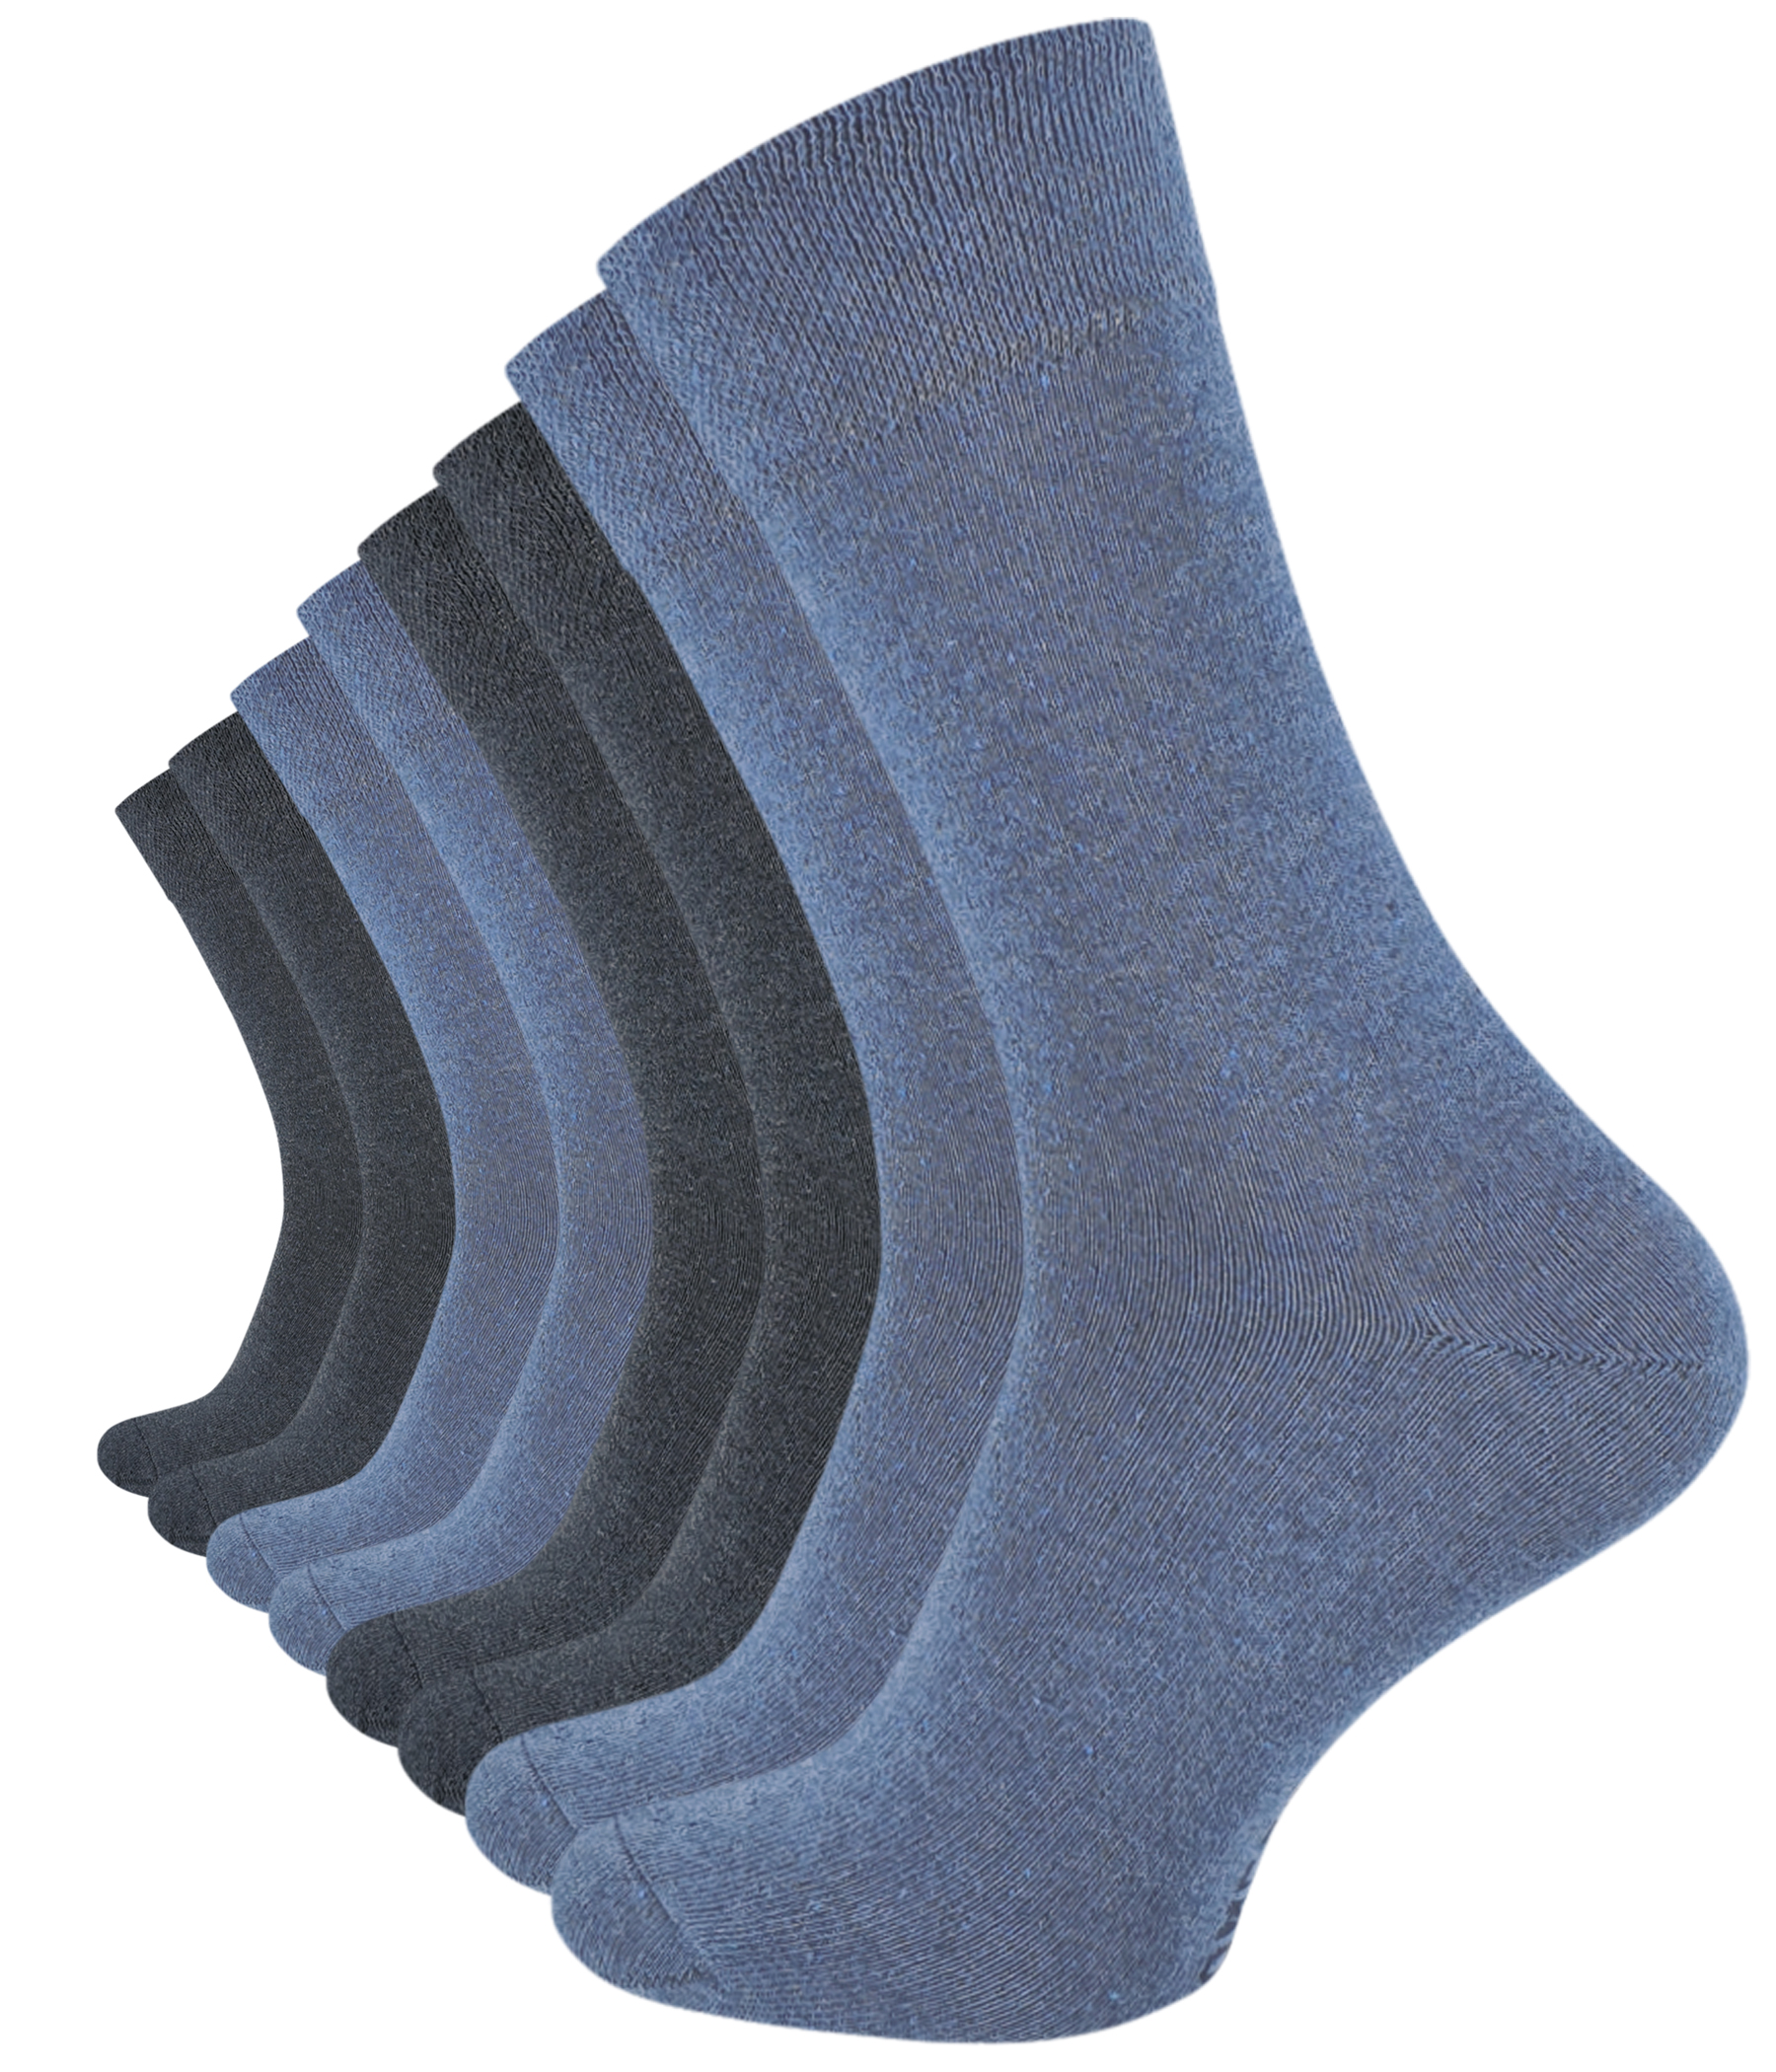 Damen-Kellner-Socken schwarz im 10er Pack 10 Paar schwarze Damensocken Cotton 